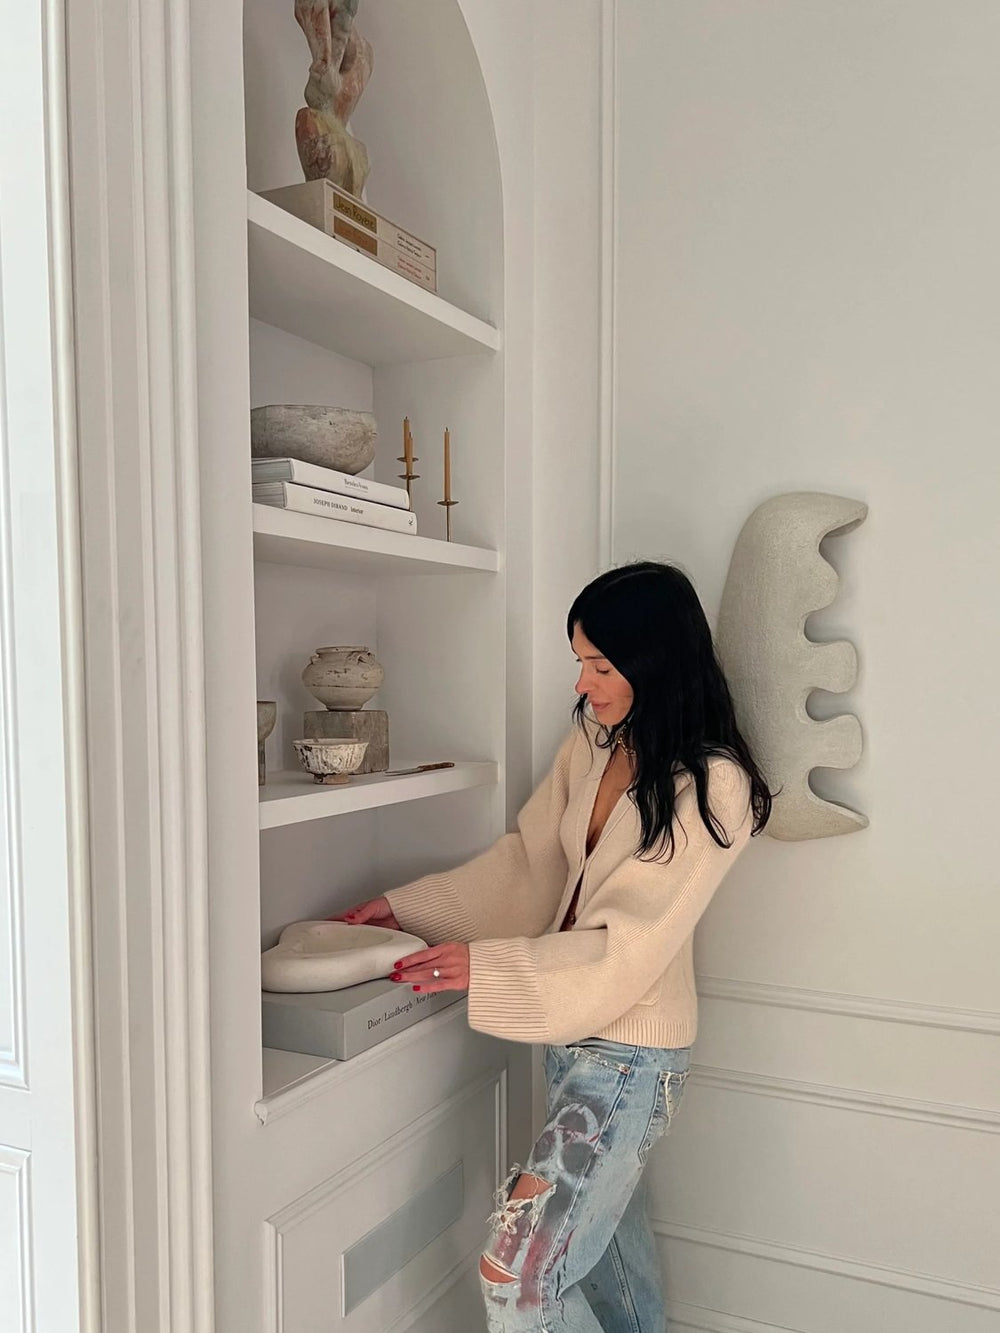 How to Style Open Shelves, According to Athena Calderone